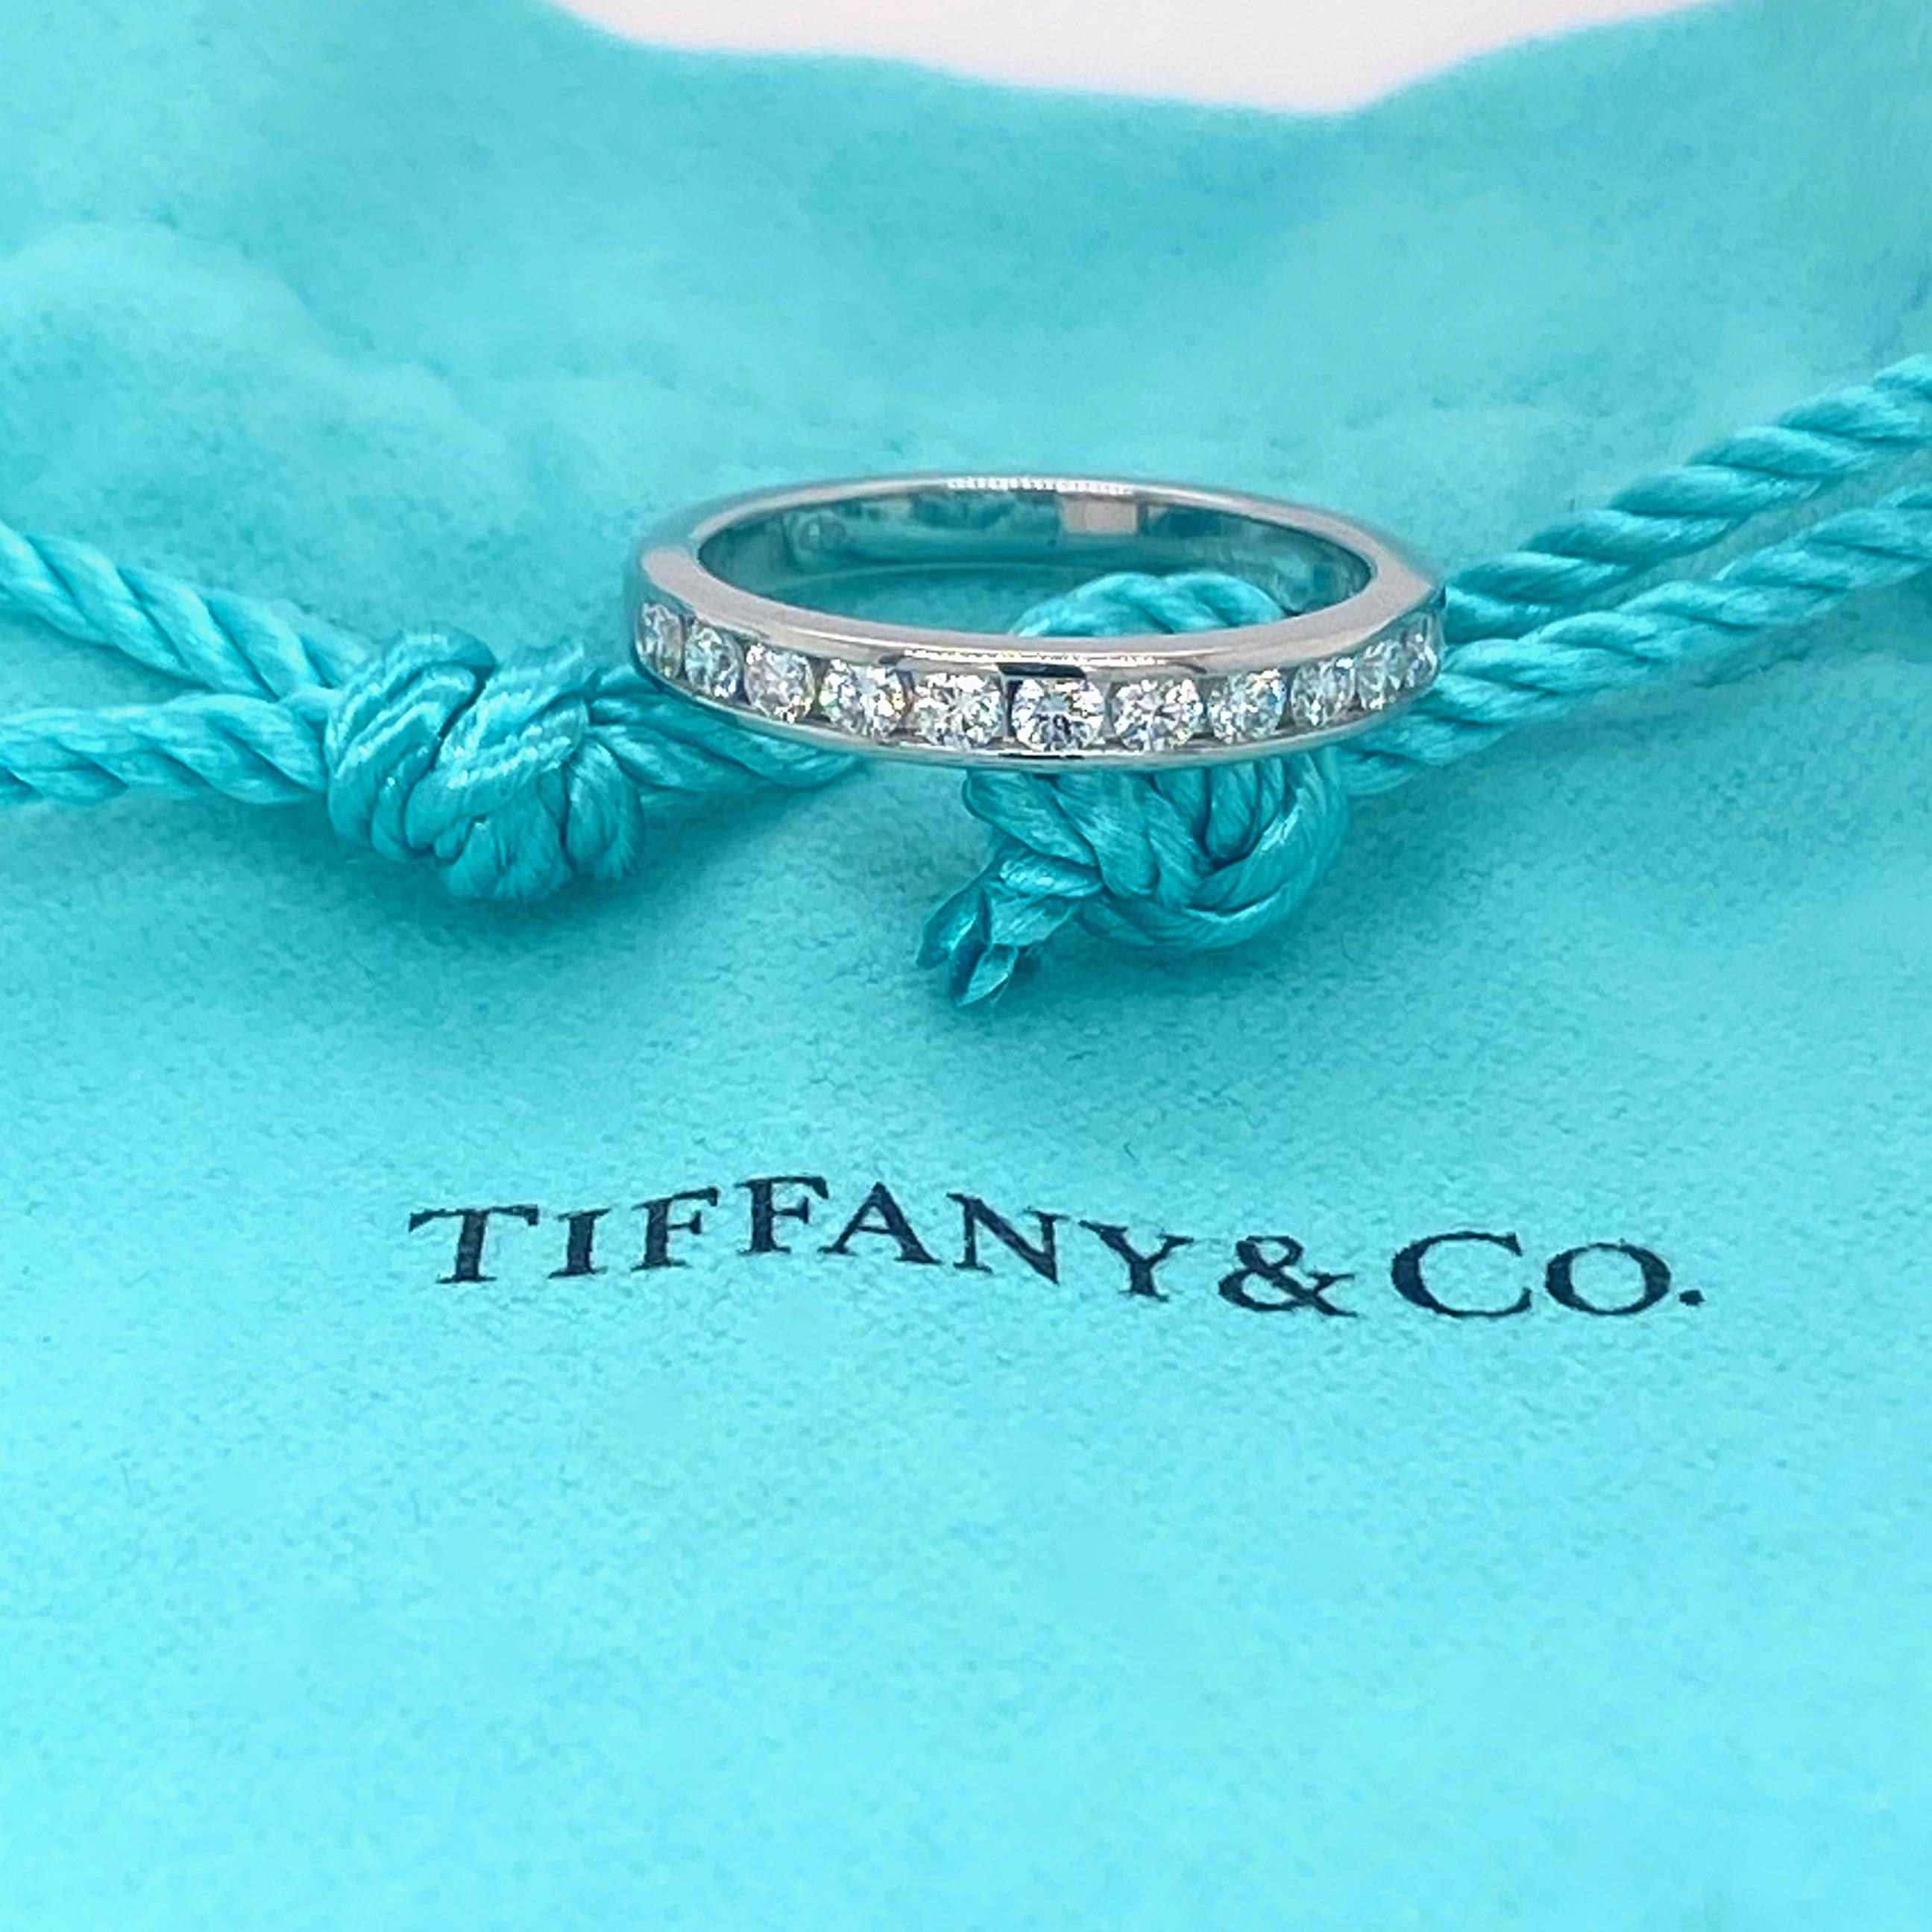 Tiffany & Co Tiffany Diamond Wedding Band Ring
Style:  Channel-Set Half Circle
Metal:  Platinum PT950
Size:   5.75
Measurements:  3 MM Width
TCW:  0.33 tcw
Main Diamond:  Round Brilliant Diamonds 
Color & Clarity:  G, VVS
Hallmark:  ©TIFFANY&CO.